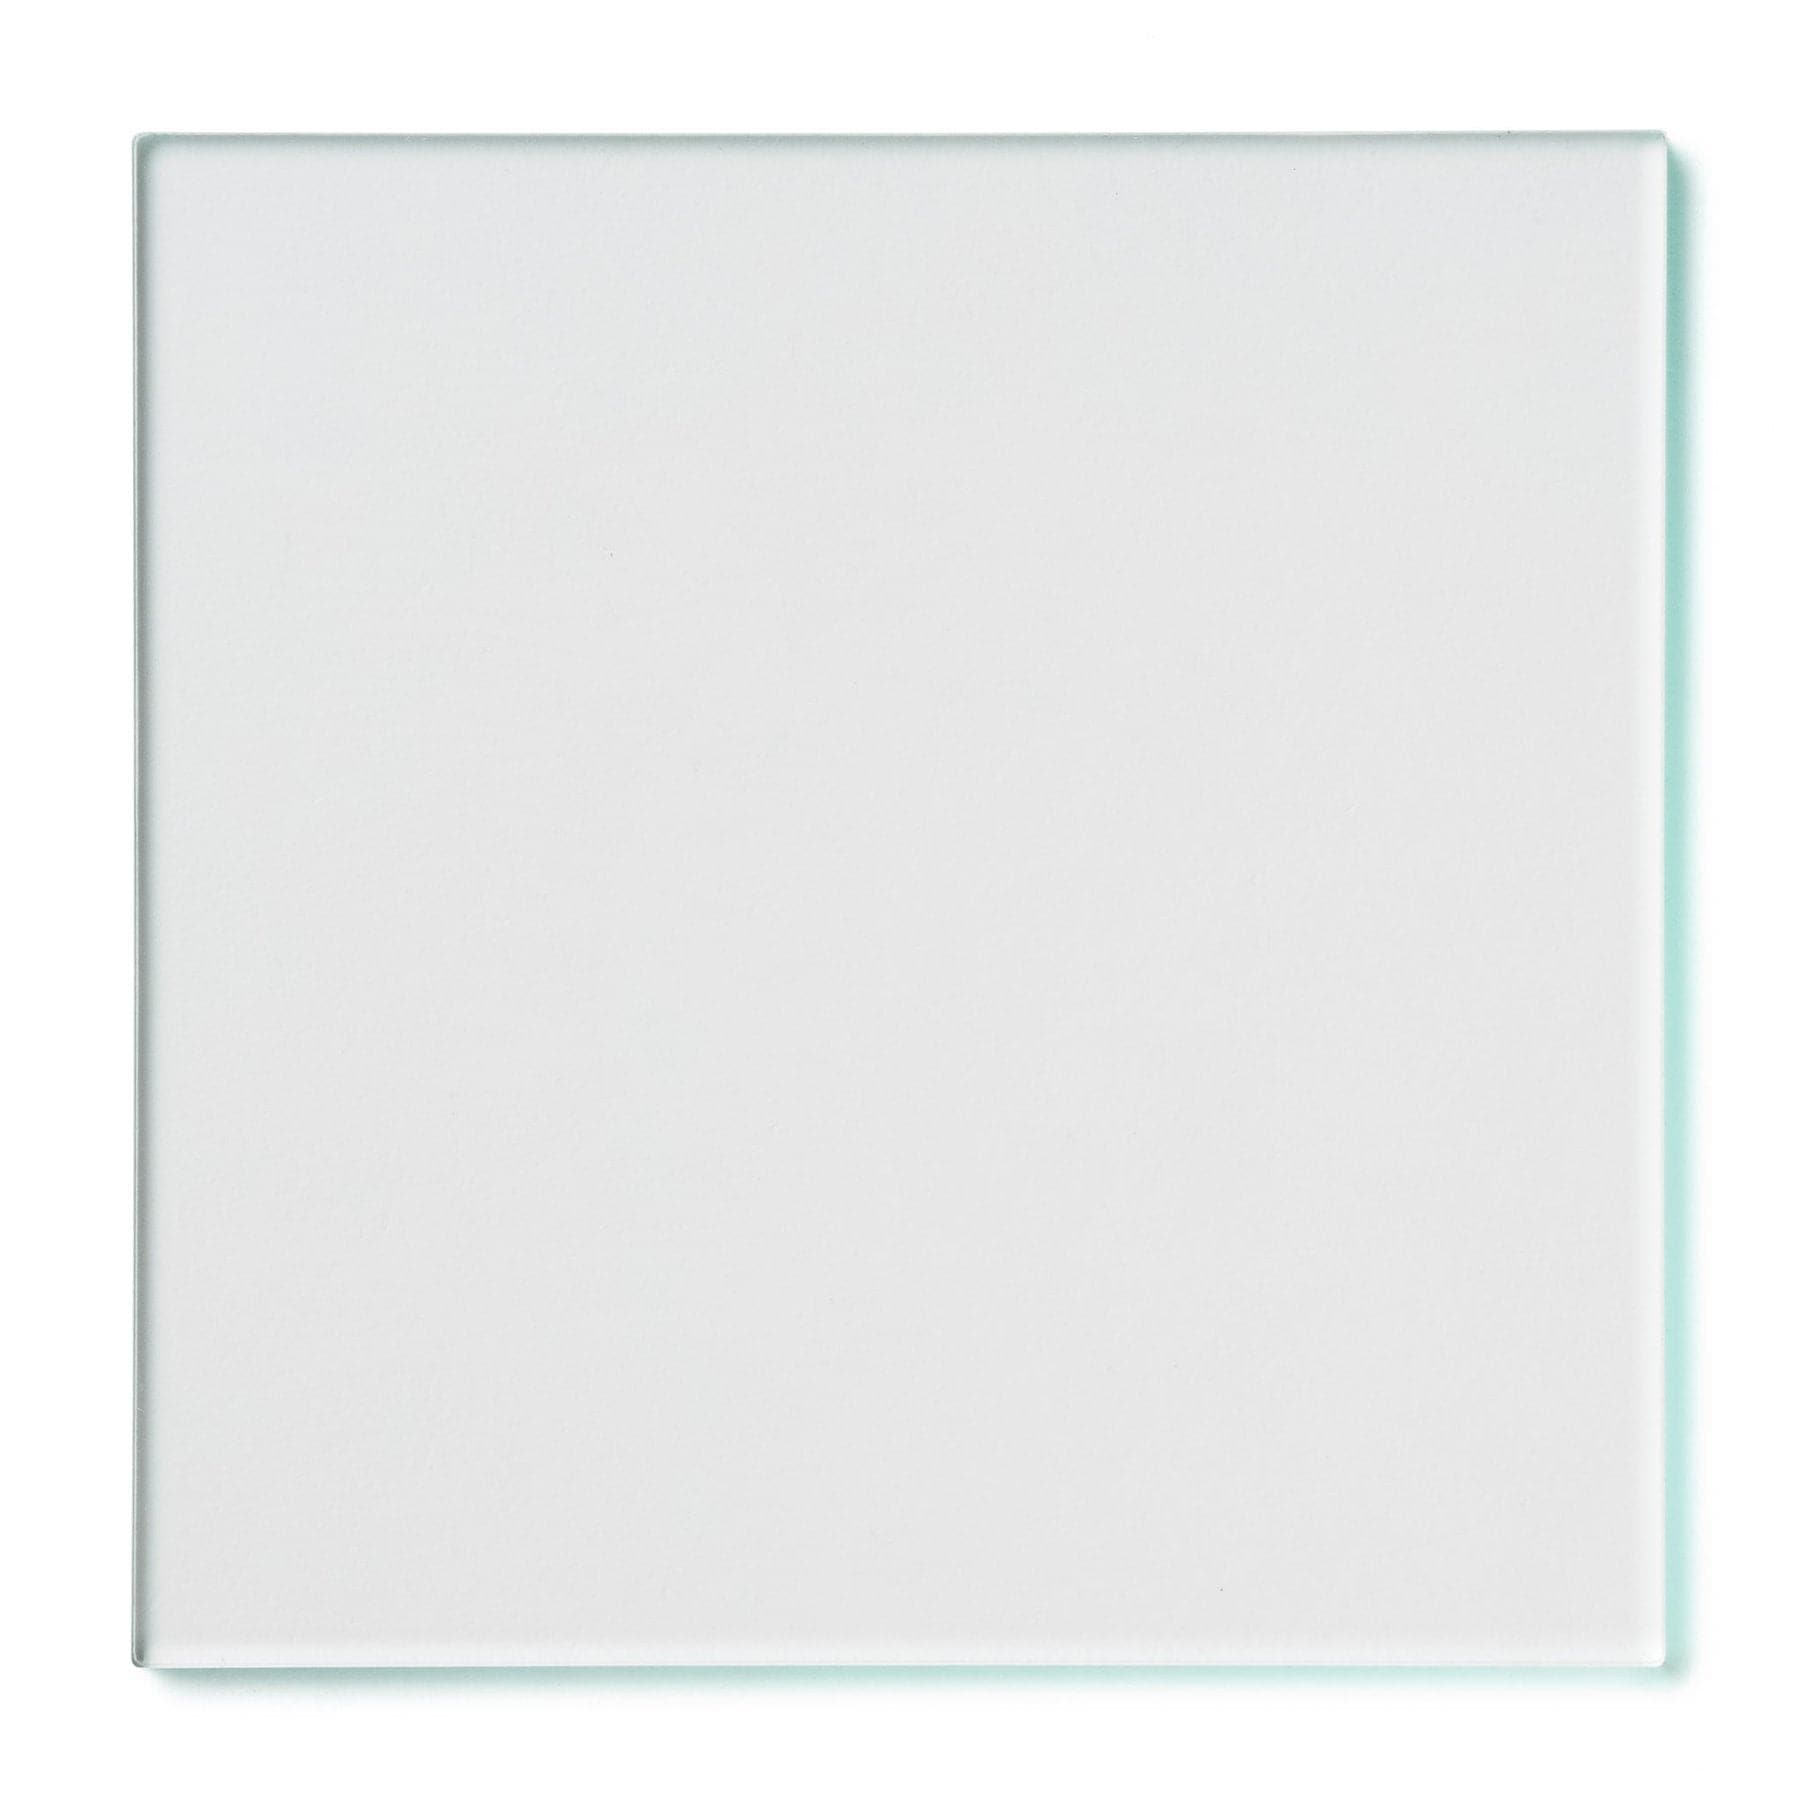 Acrylic Sheet 1/8" Clear Glass effect #3030 (Green Edge)